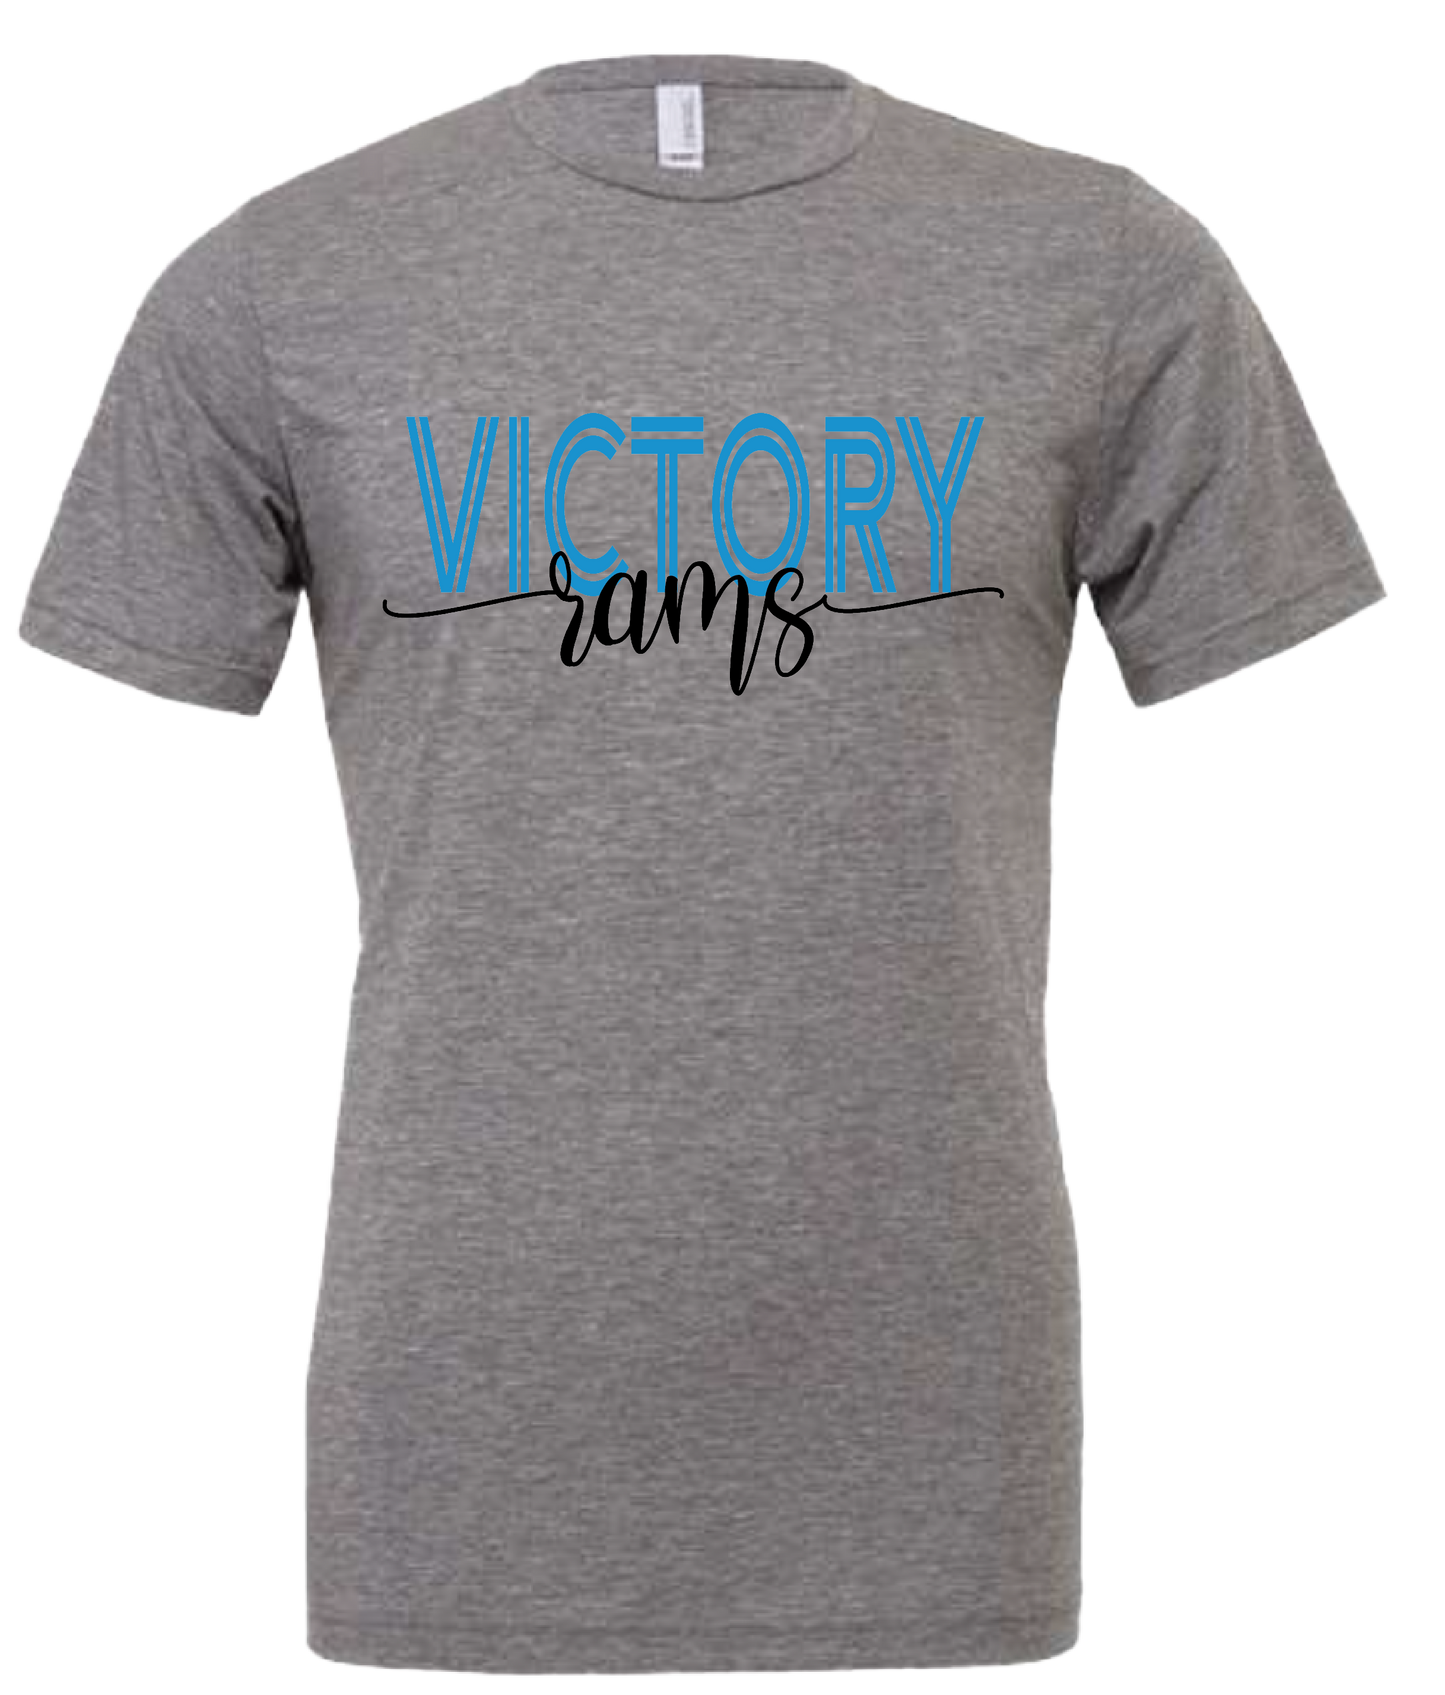 Victory Rams script design t-shirt